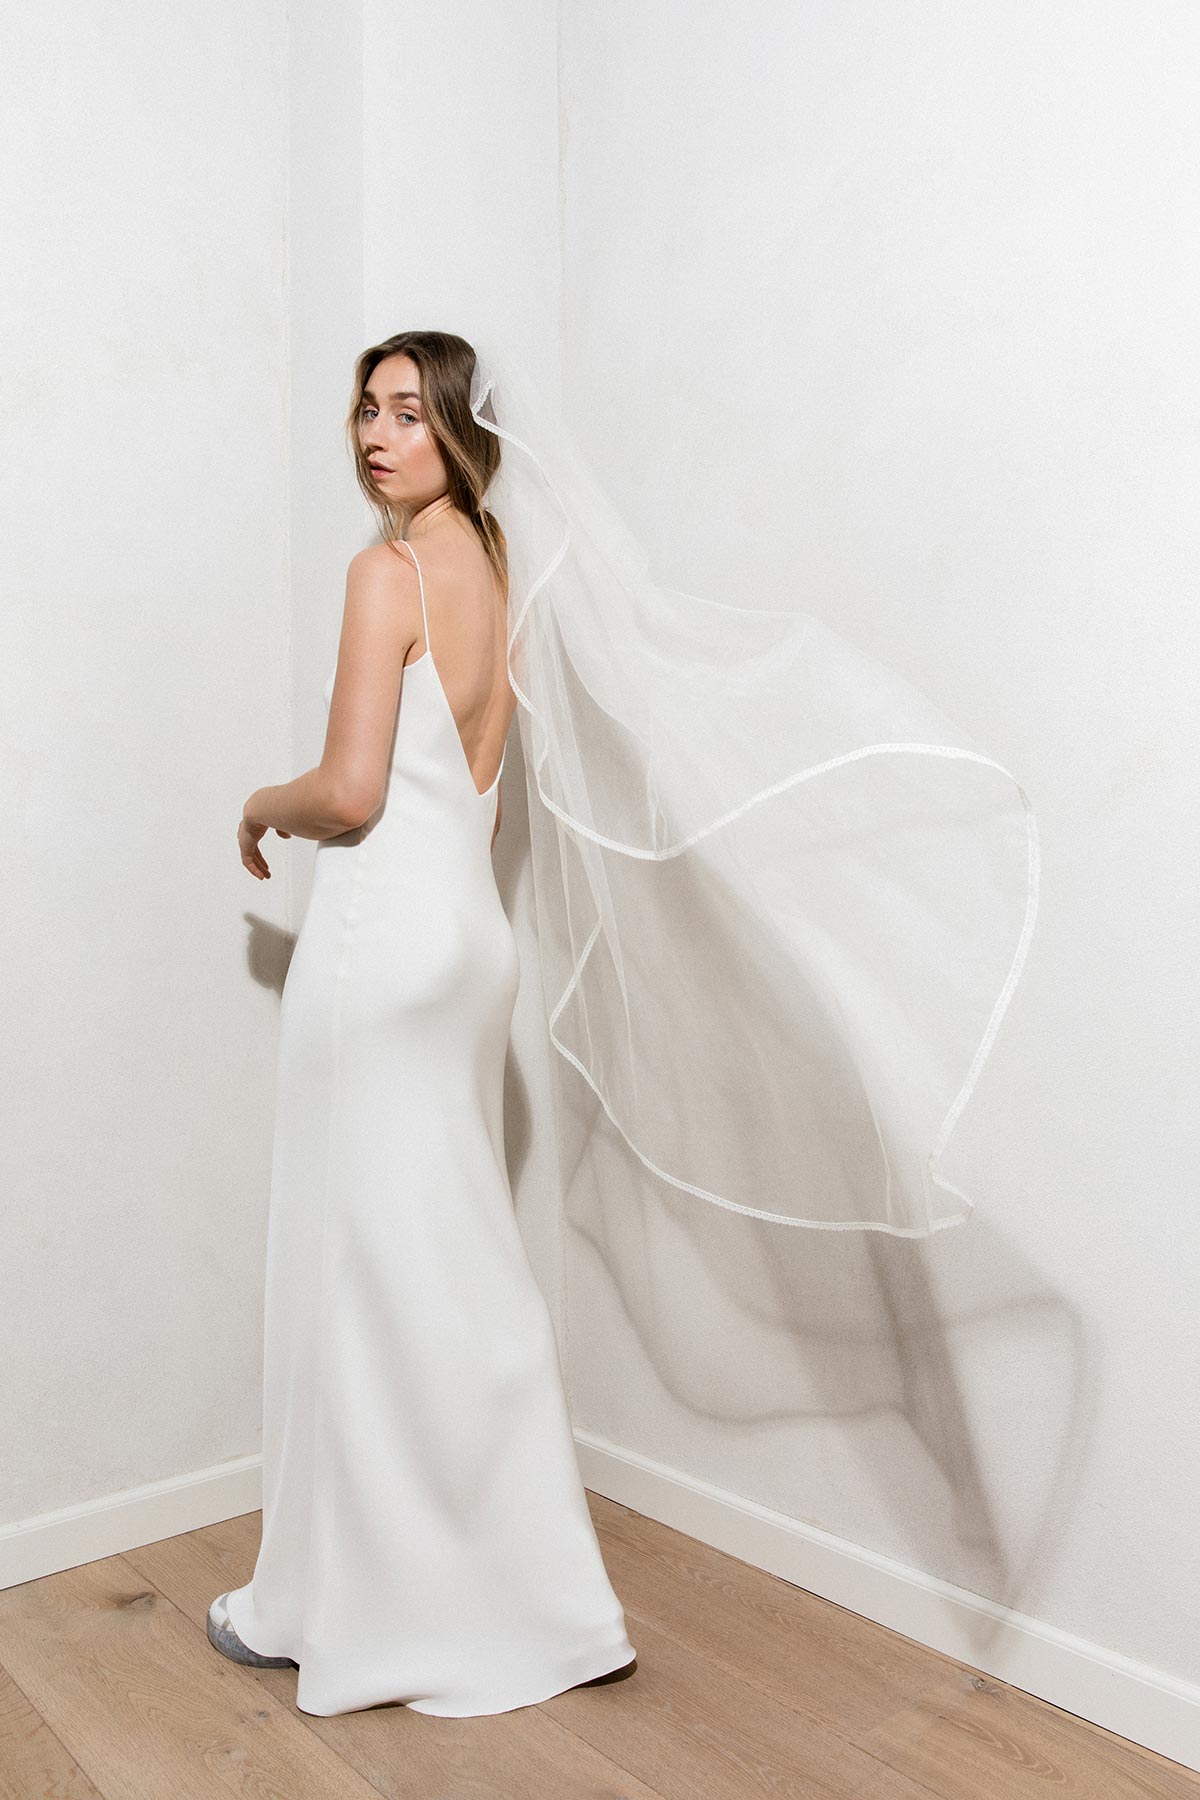 midi length modern bridal veil look with slip dress